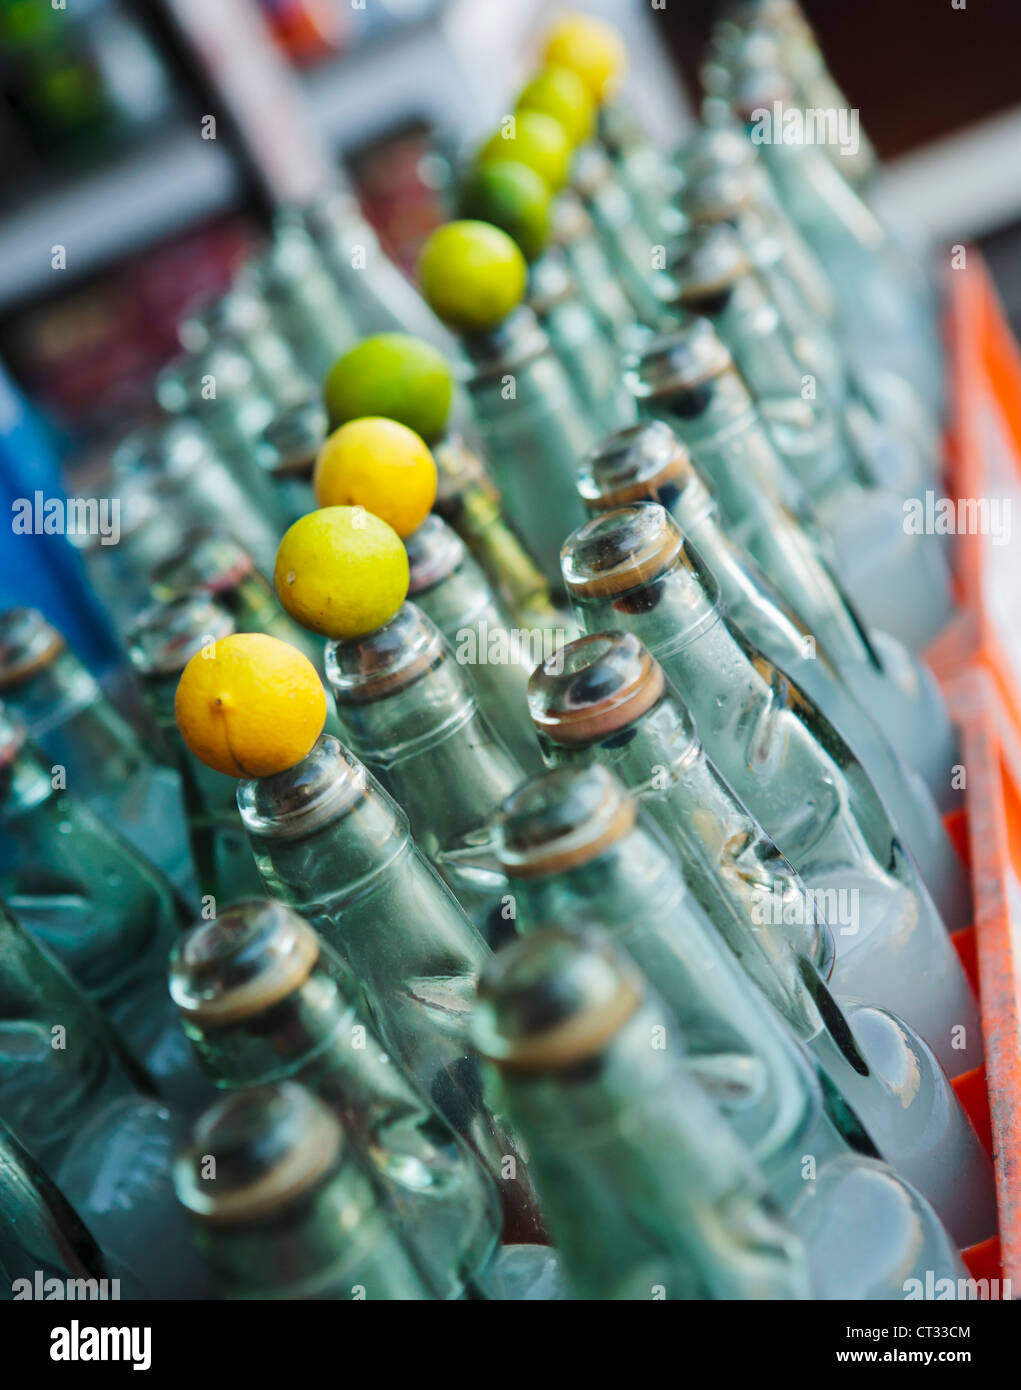 Rows of lemonade bottles with lemons on top, Himachal Pradesh, India Stock Photo